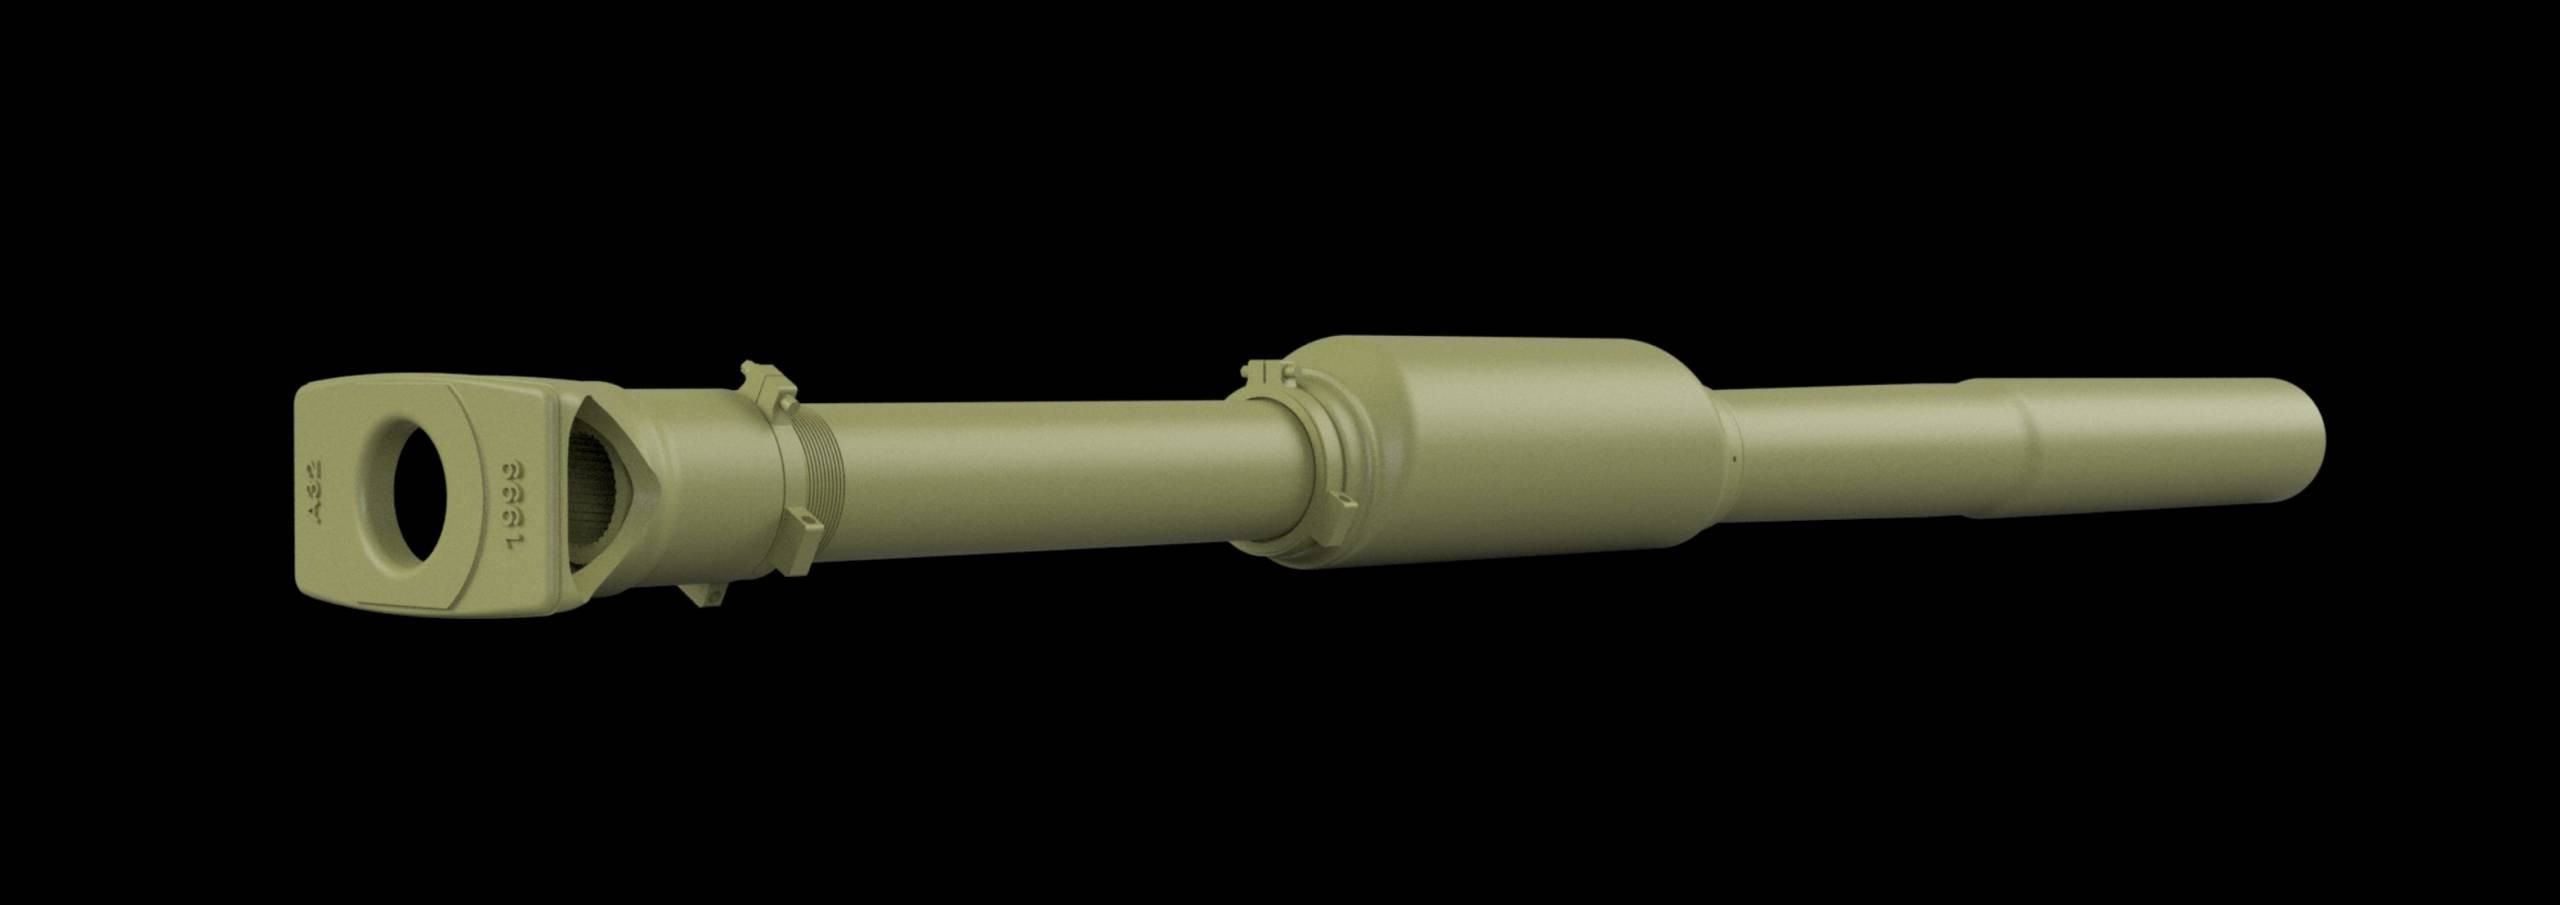 GB35-106 G5 Howitzer barrel for G6 “Rhino”